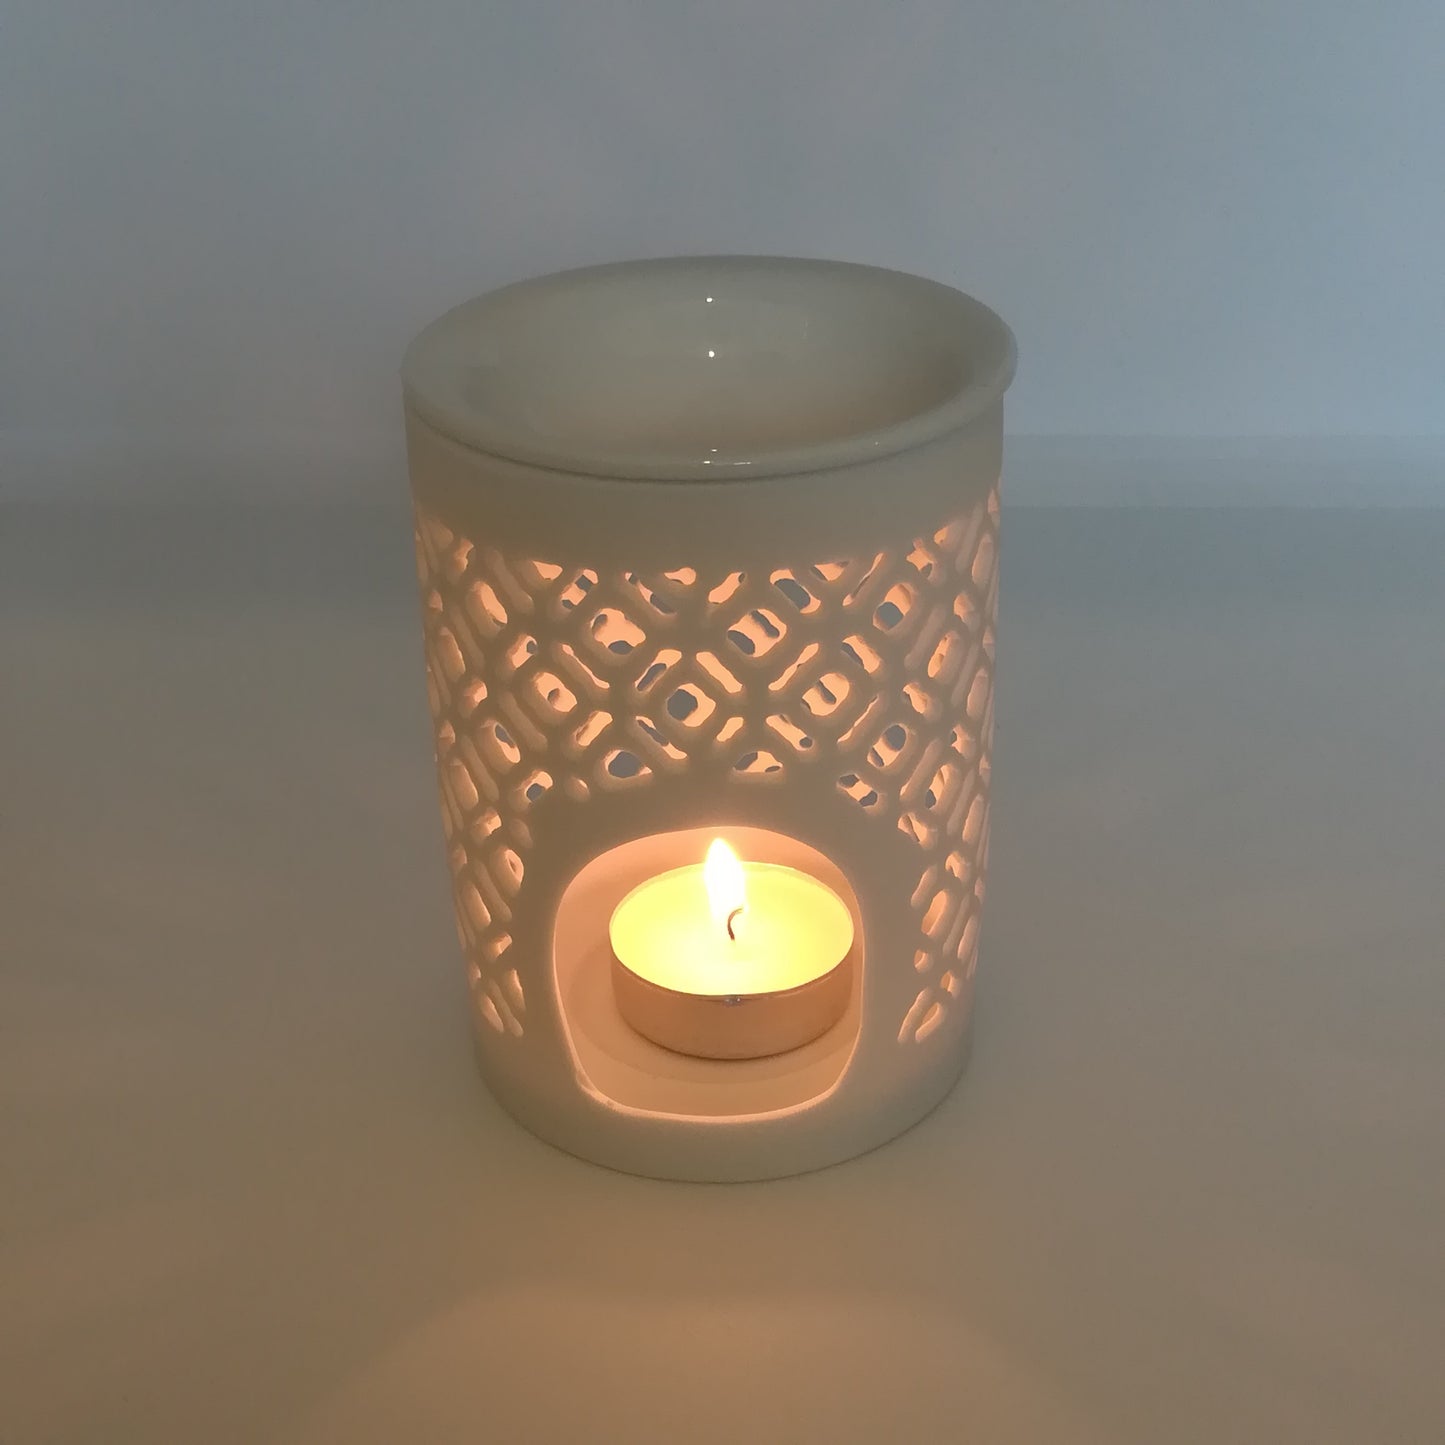 ceramic wax melt burner moroccan lattice pattern with tealight candle